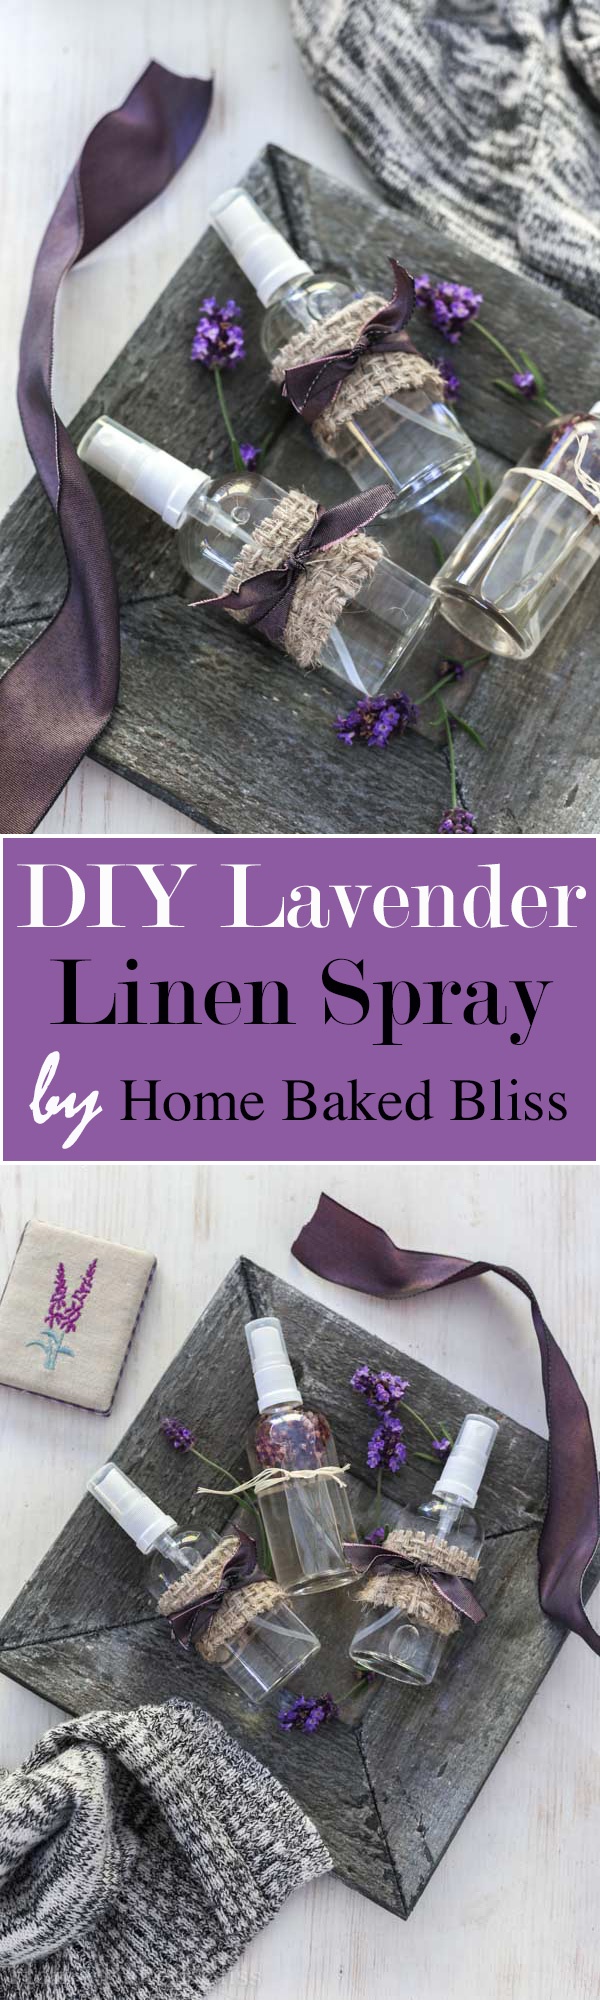 A sleep promoting and calming DIY Lavender Linen Spray.